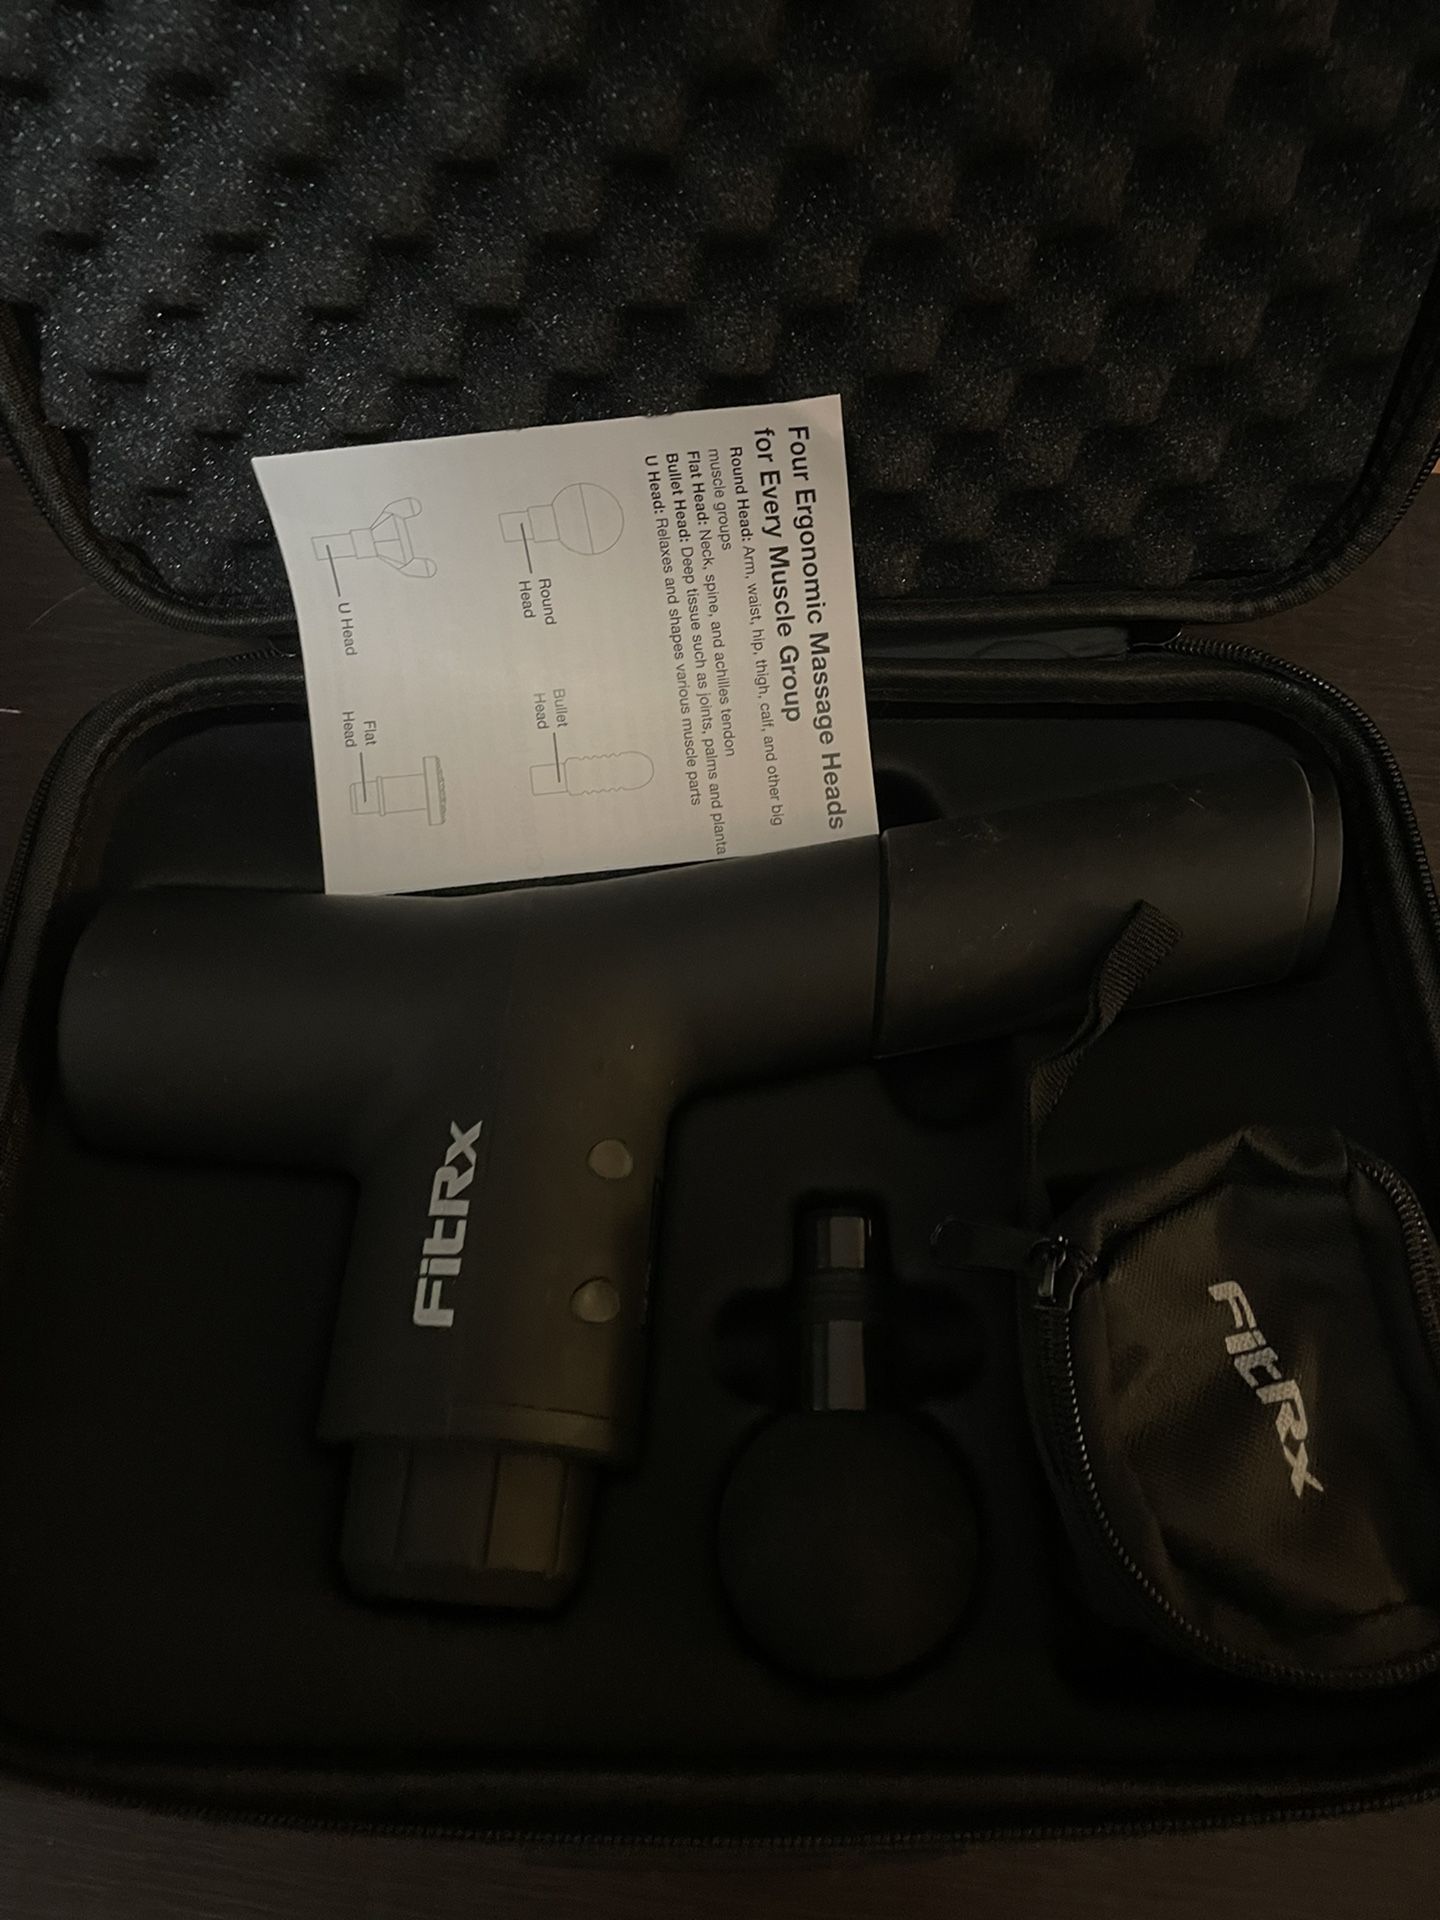 FitRX Massage Gun